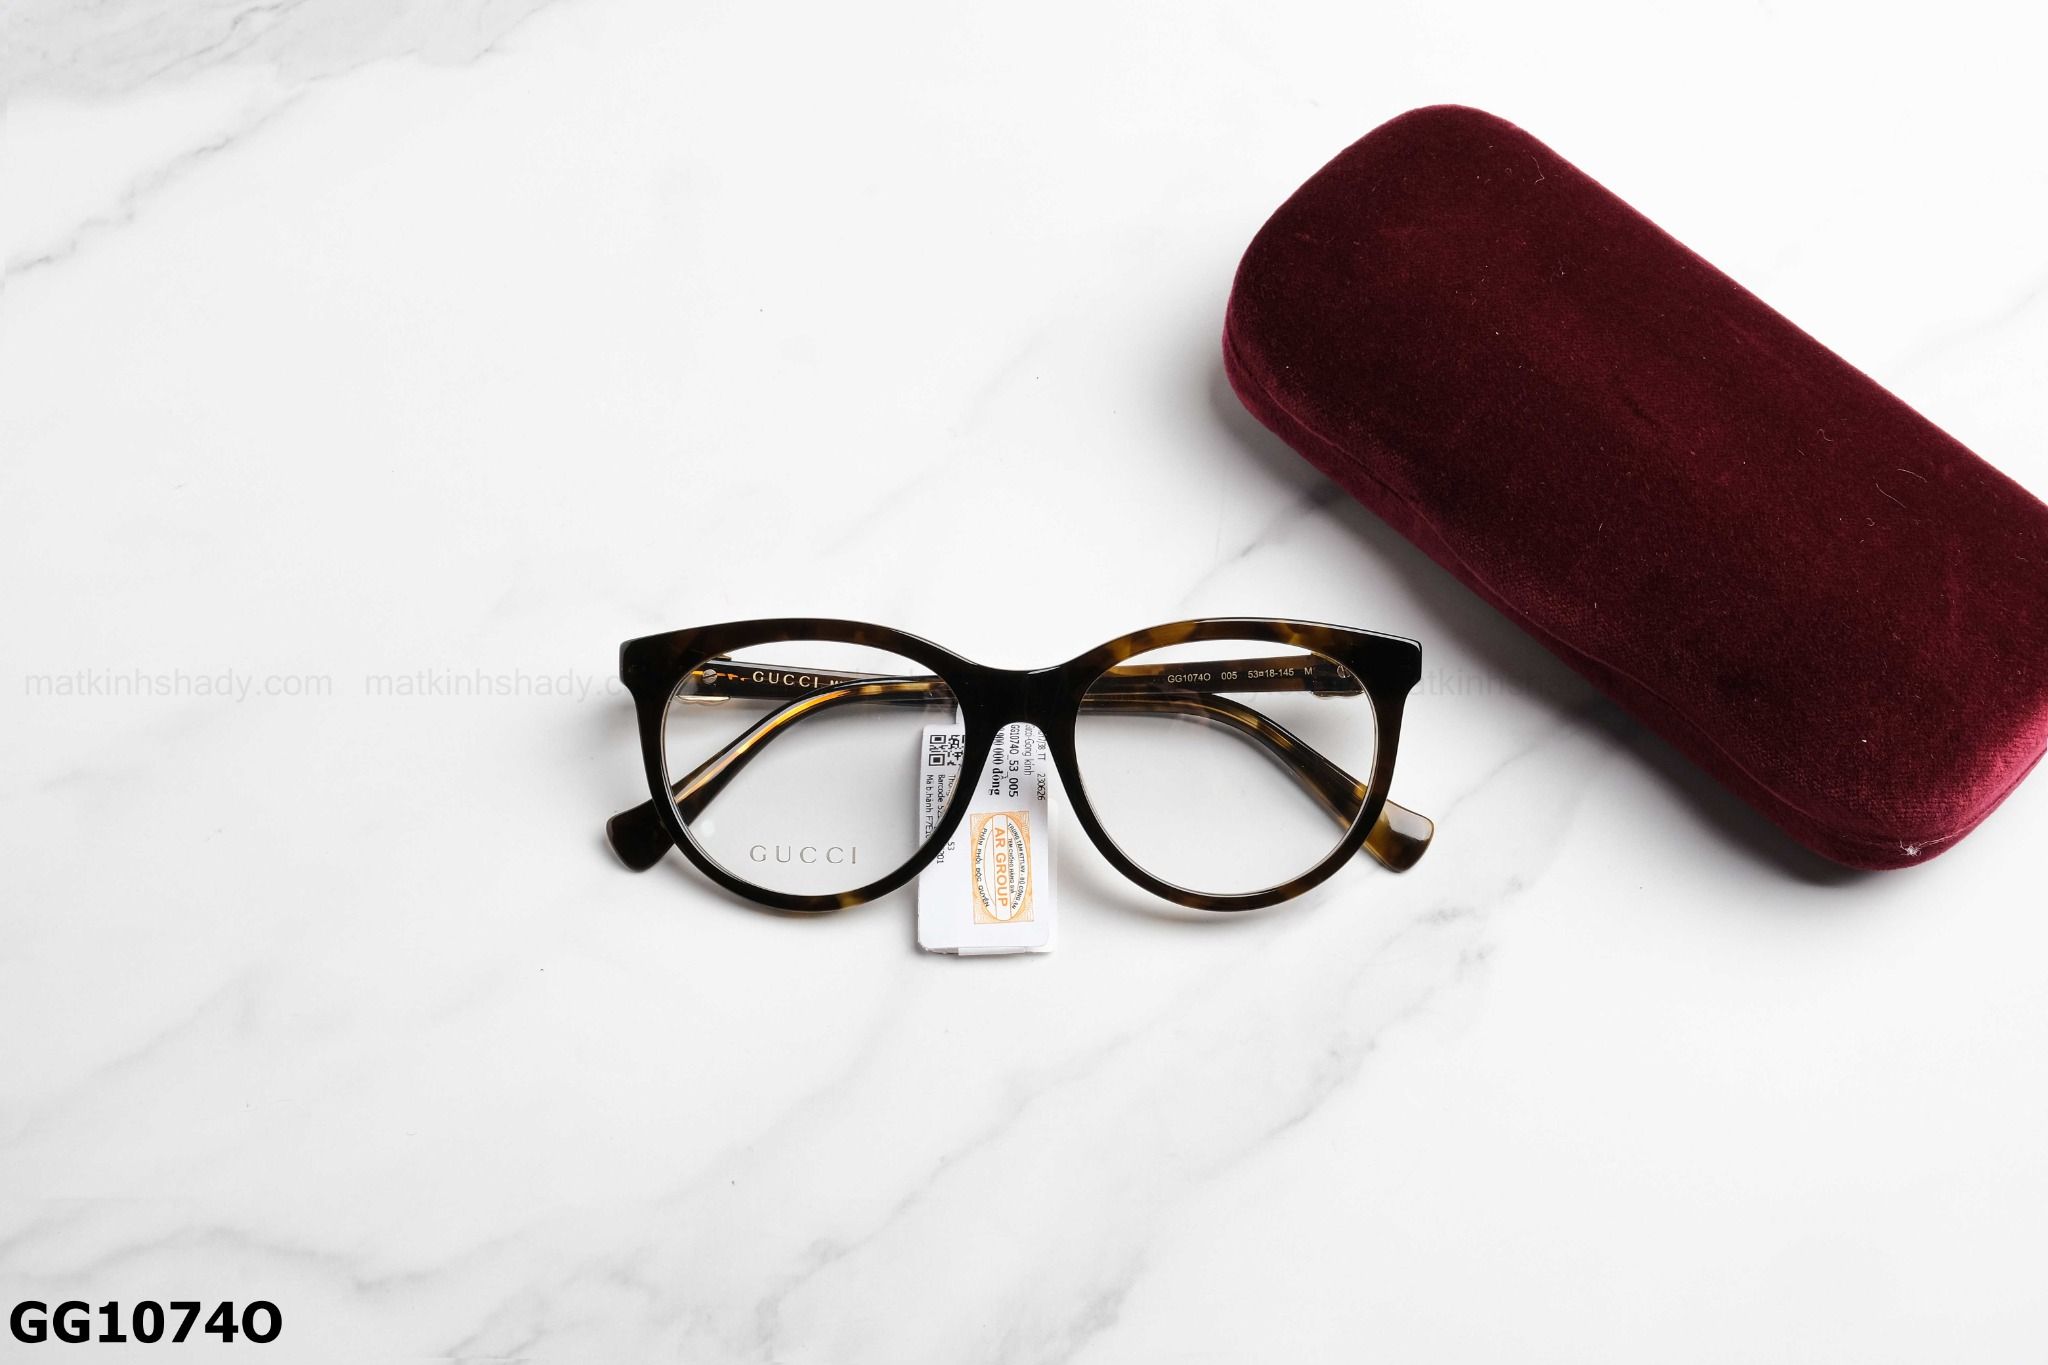  Gucci Eyewear - Glasses - GG1074O 